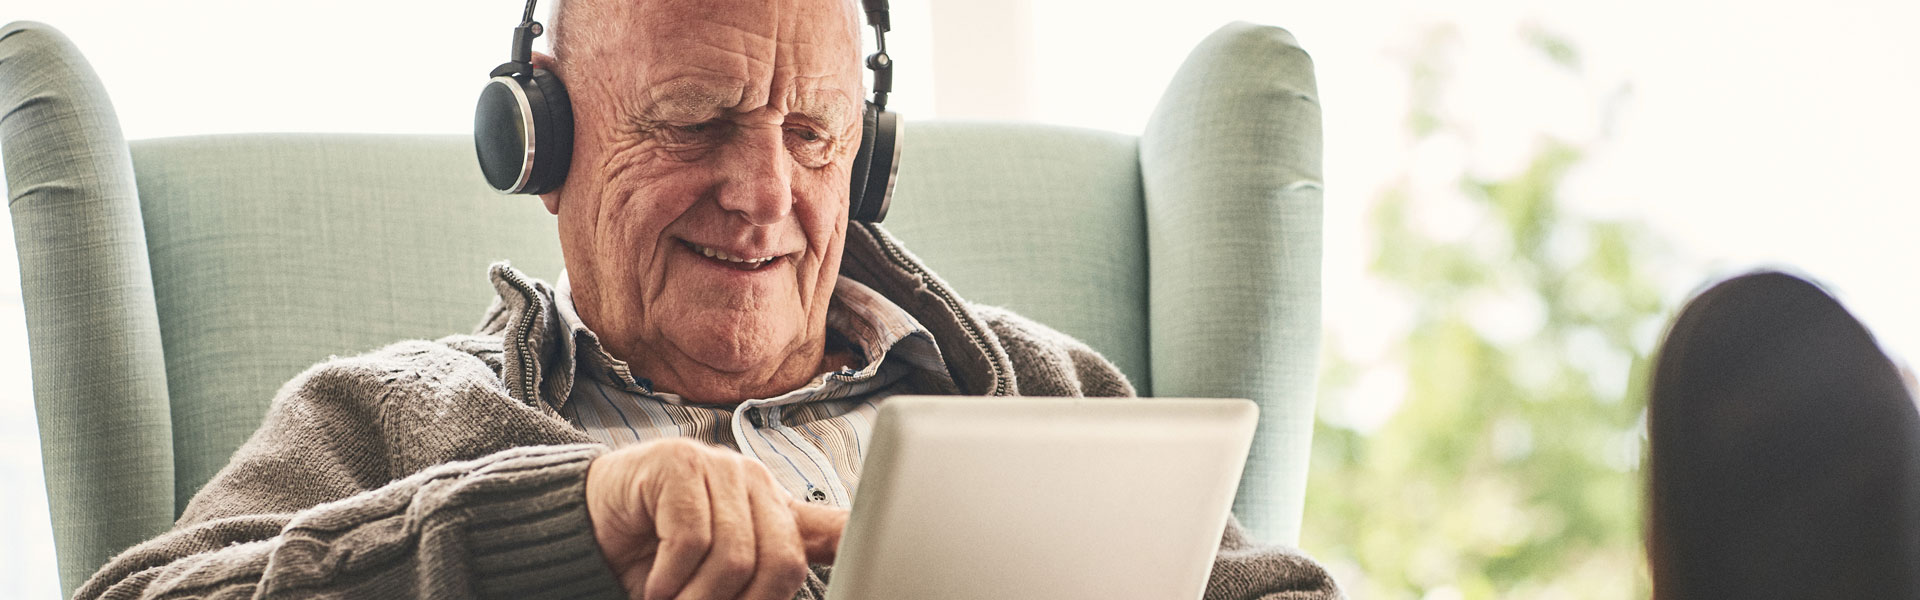 Senior man with headphones using digital tablet